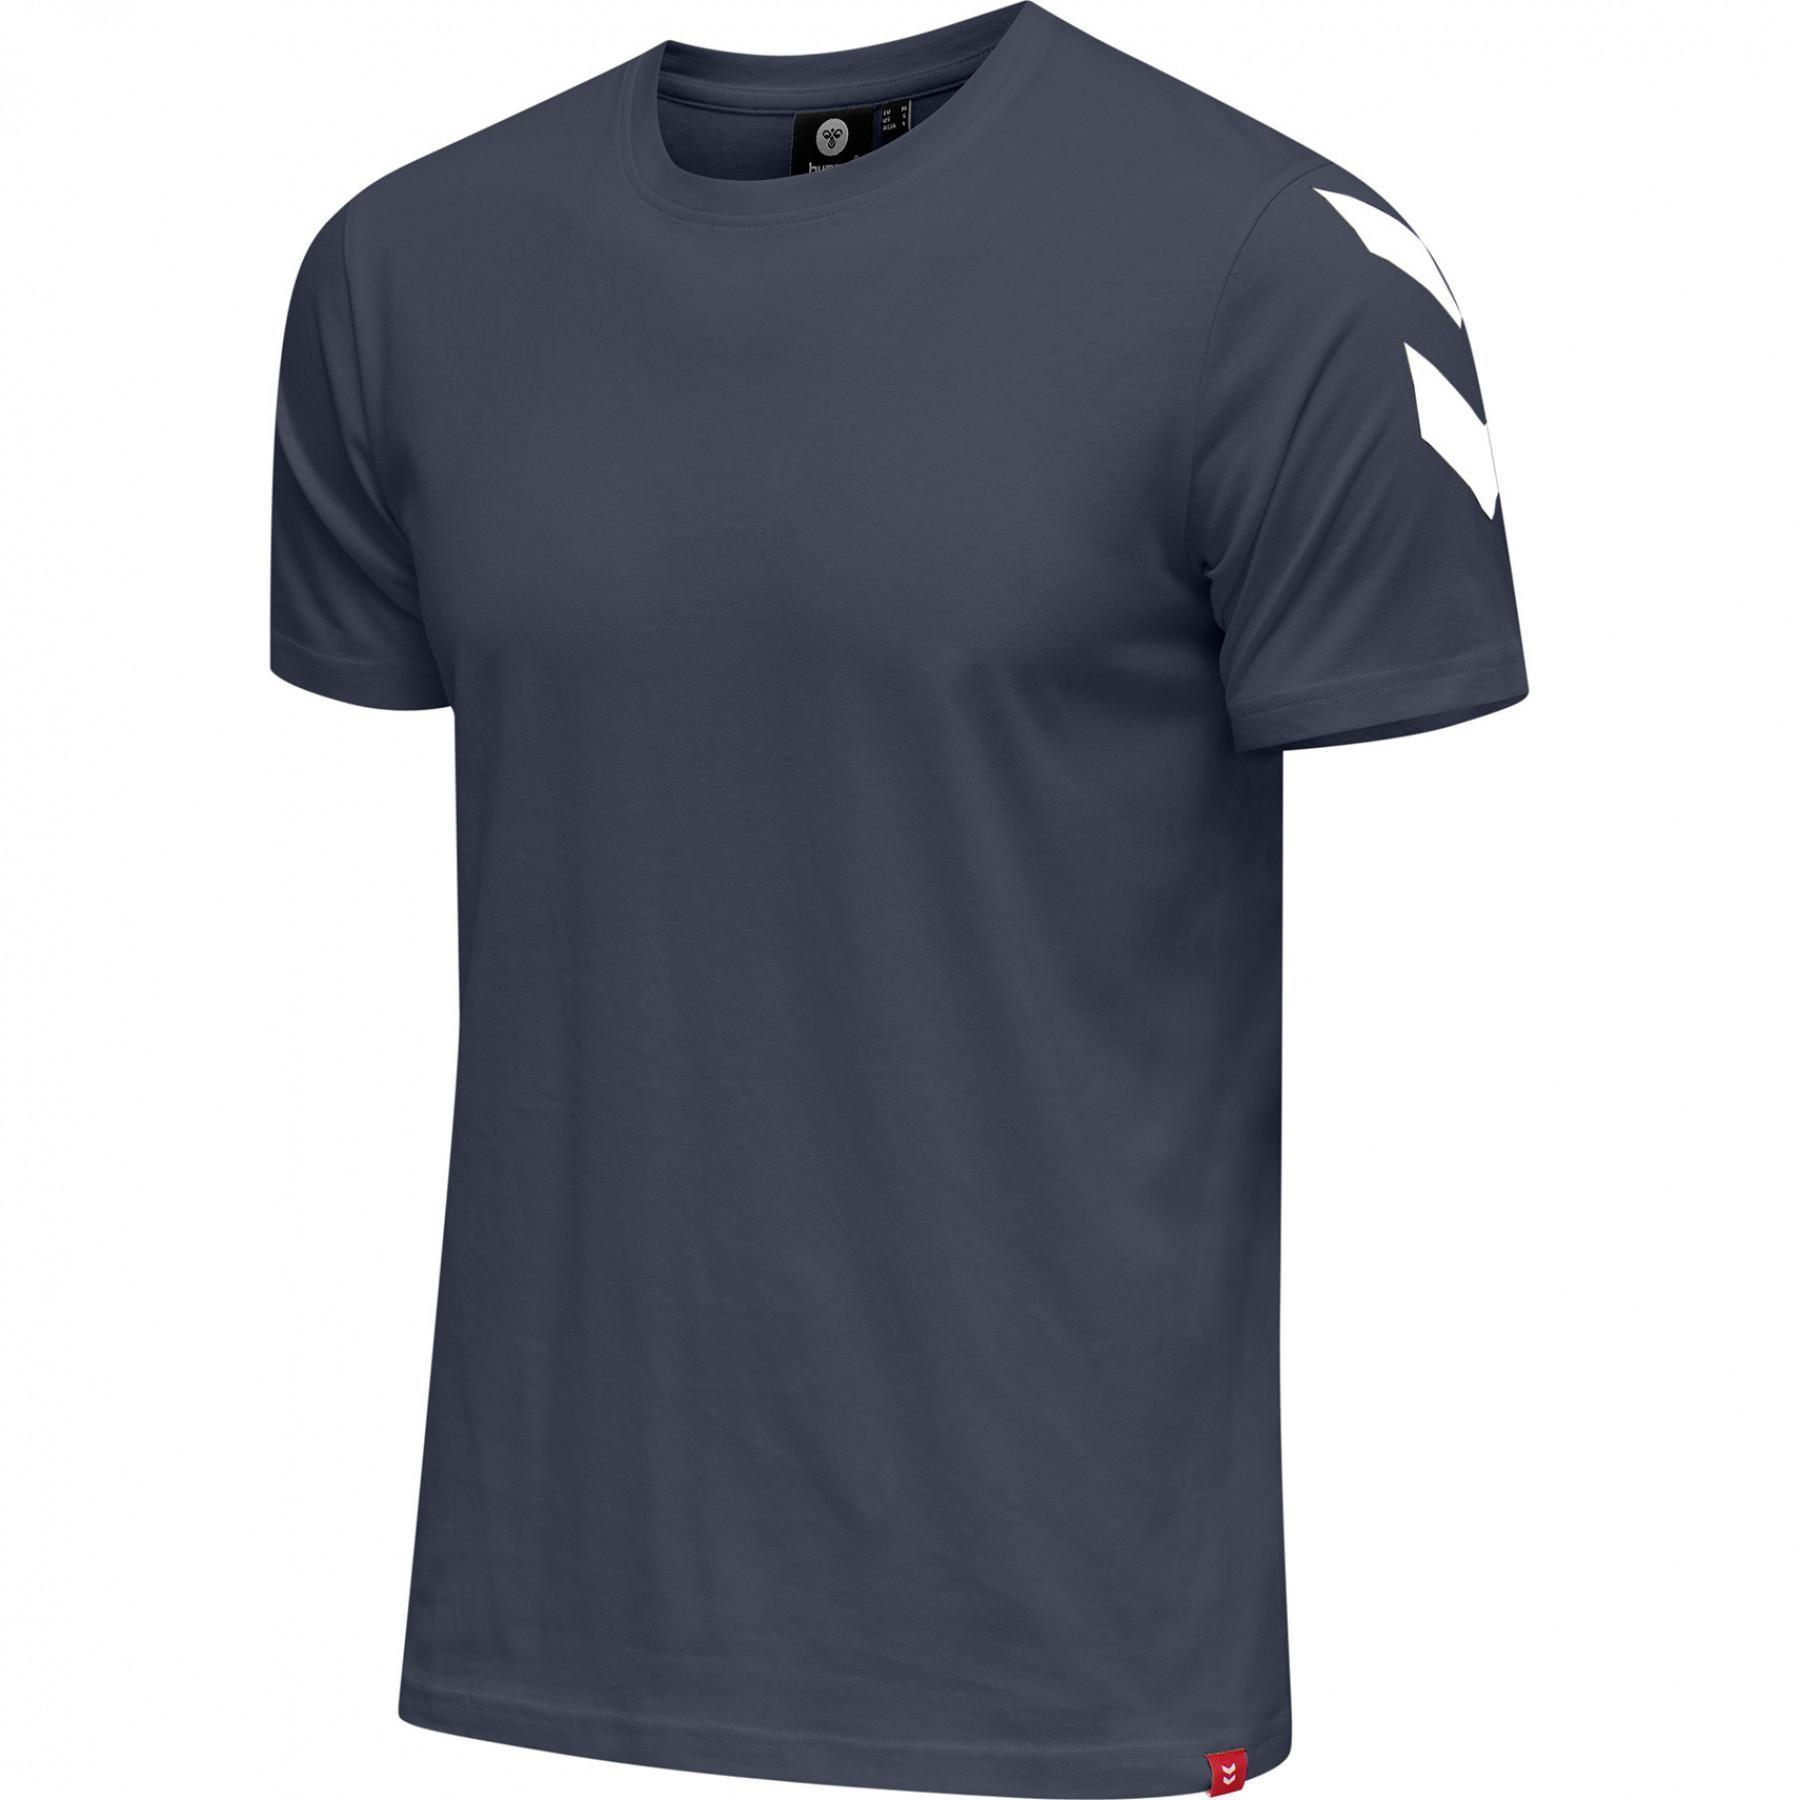 Slocog wear - shirt met logo en print achterop in blauw chevron - Textile -  Zebru Responsive Short Sleeve T-Shirt - Fashion loves a party shirt - Under  Armour Training T